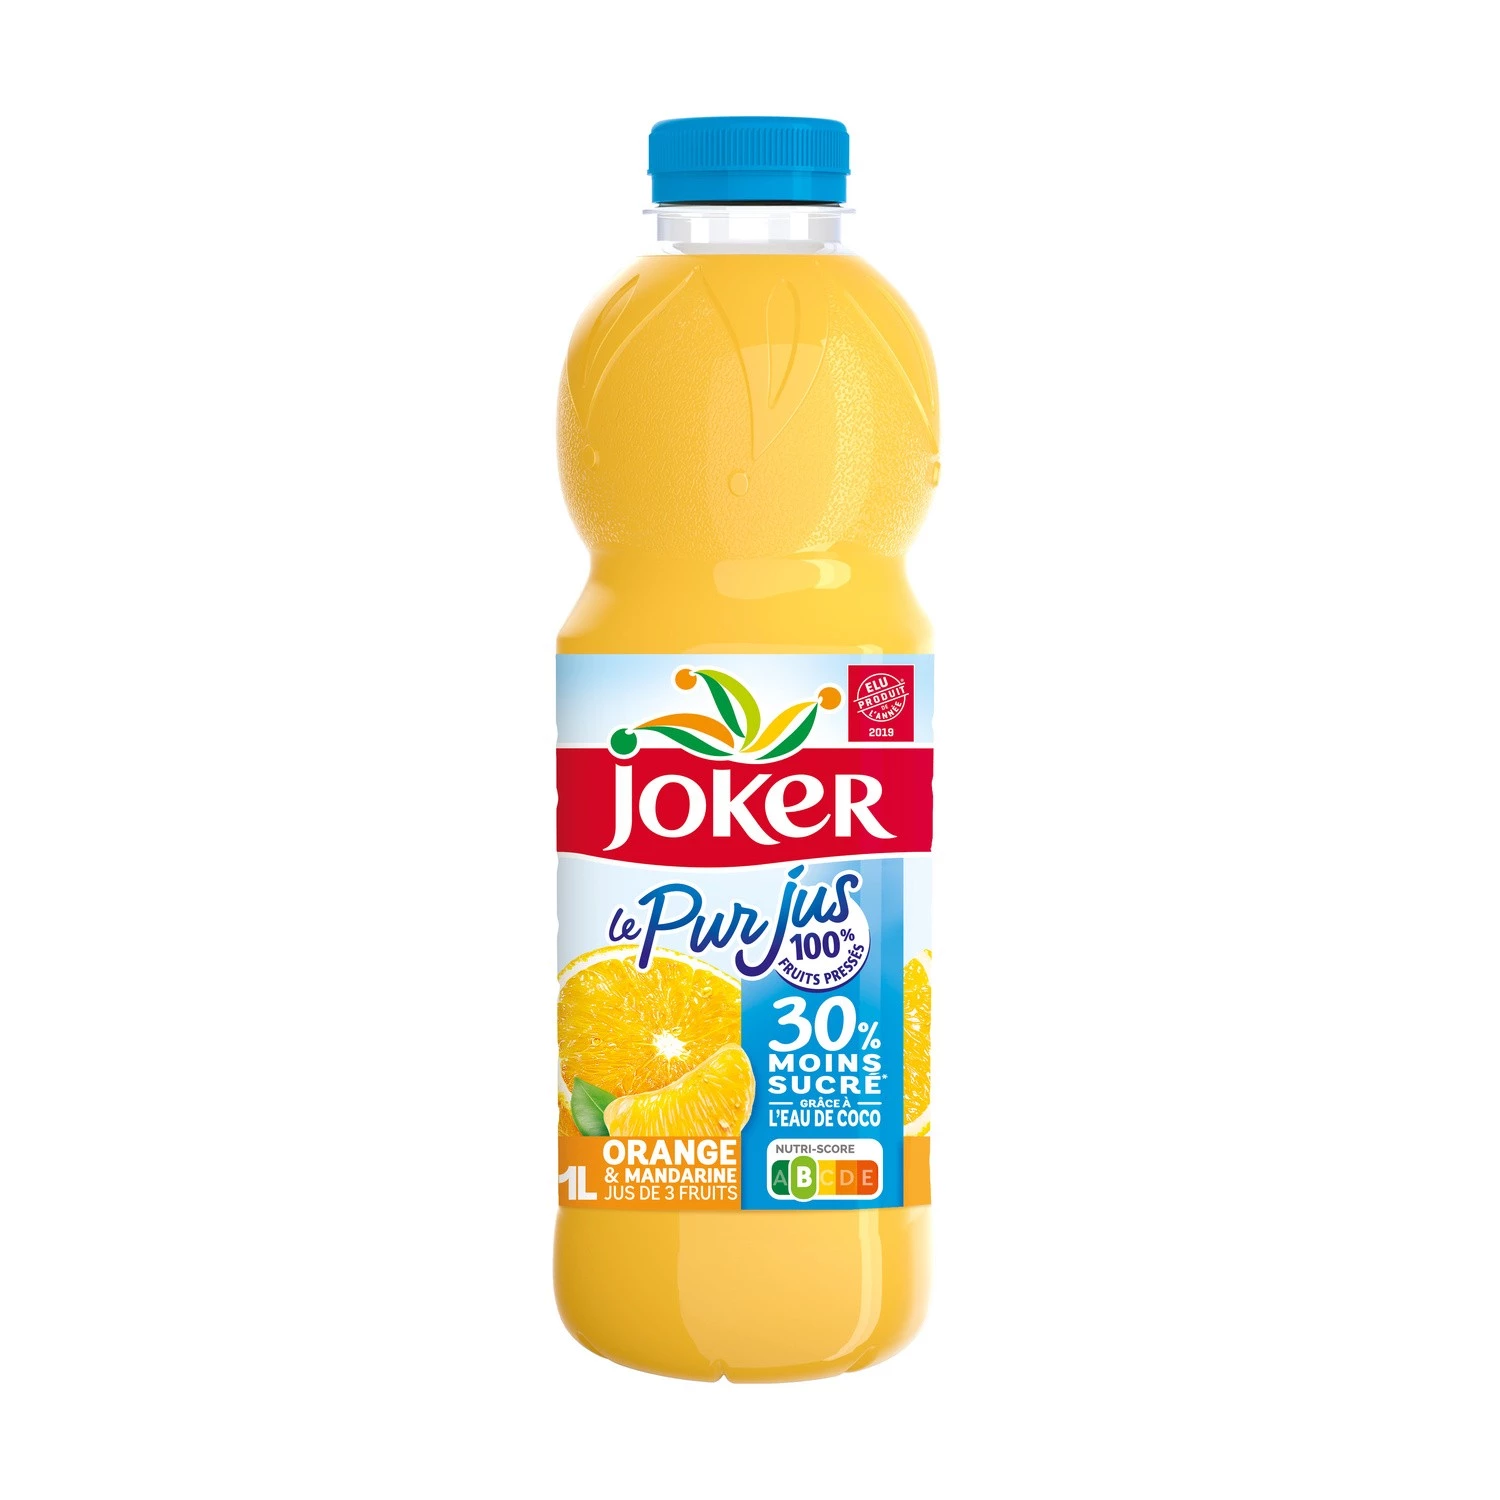 PUR JUS -30% sucre 3 FRUITS OrangeMandarine 1l - JOKER